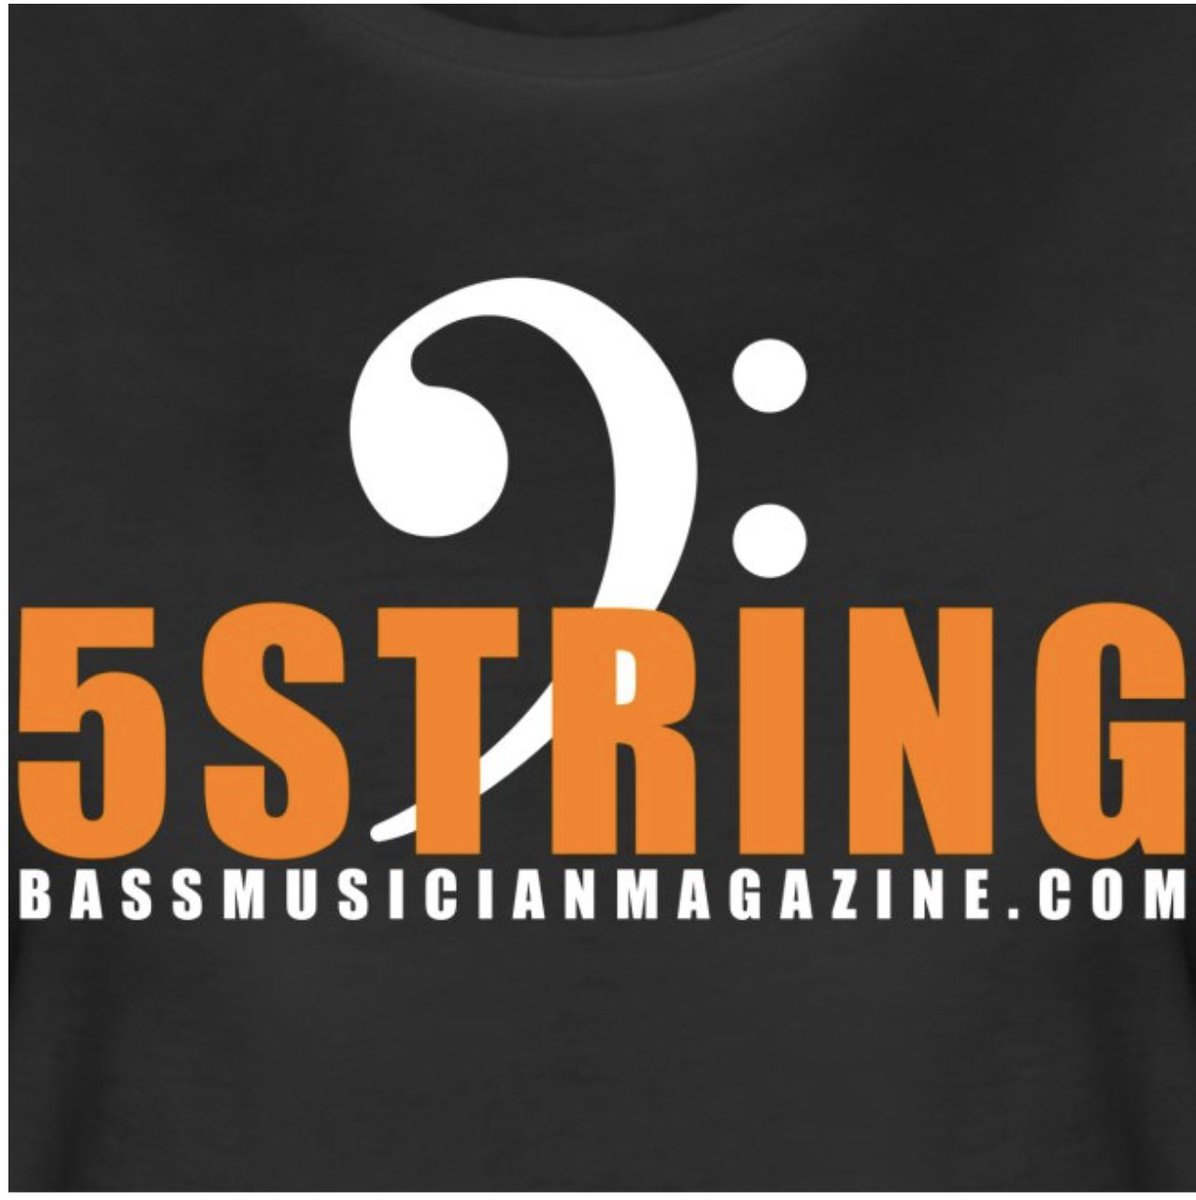 Bass Clef 5-String Women's Premium T-Shirt Sizes S-3XL loom.ly/9pcuLwk #bassmusicianmag #bassmusician #bassplayer #bassguitarist #electricbassist #bassguitars #bassguitar #electricbass #bassist #bass #bassporn #bajo #baixo #baixos #bassline #ad